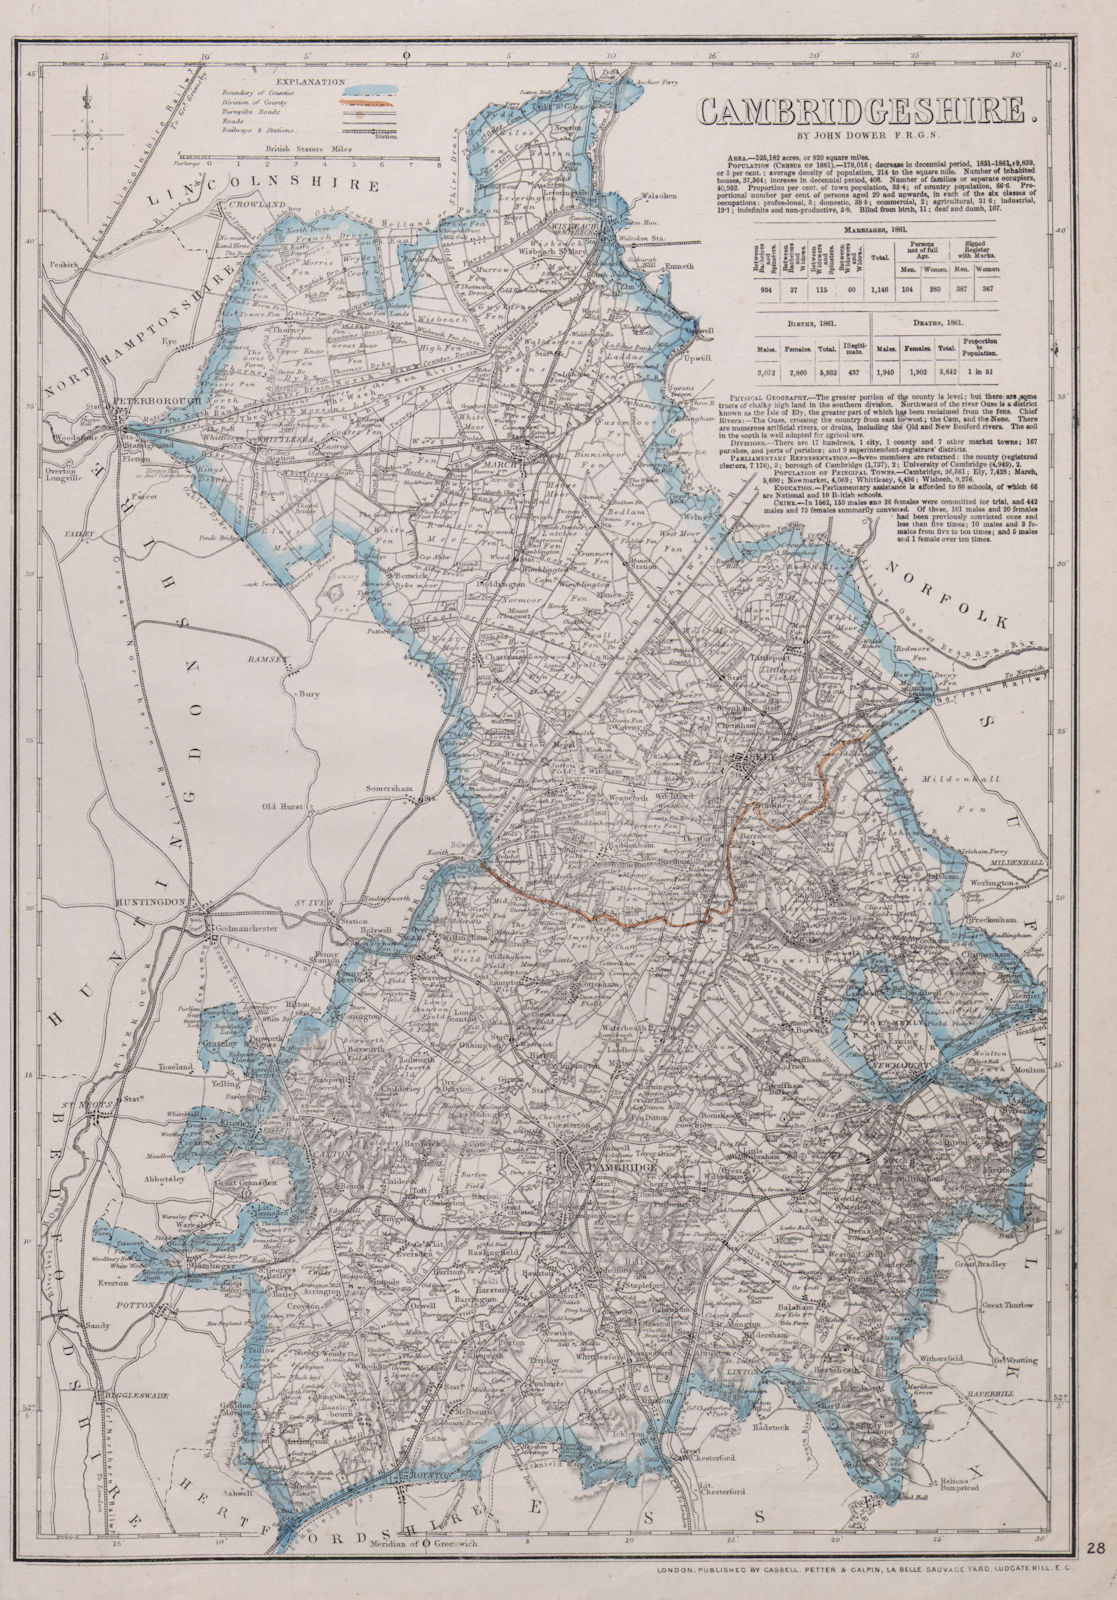 Associate Product CAMBRIDGESHIRE. Antique county map. Railways turnpike roads. DOWER 1868